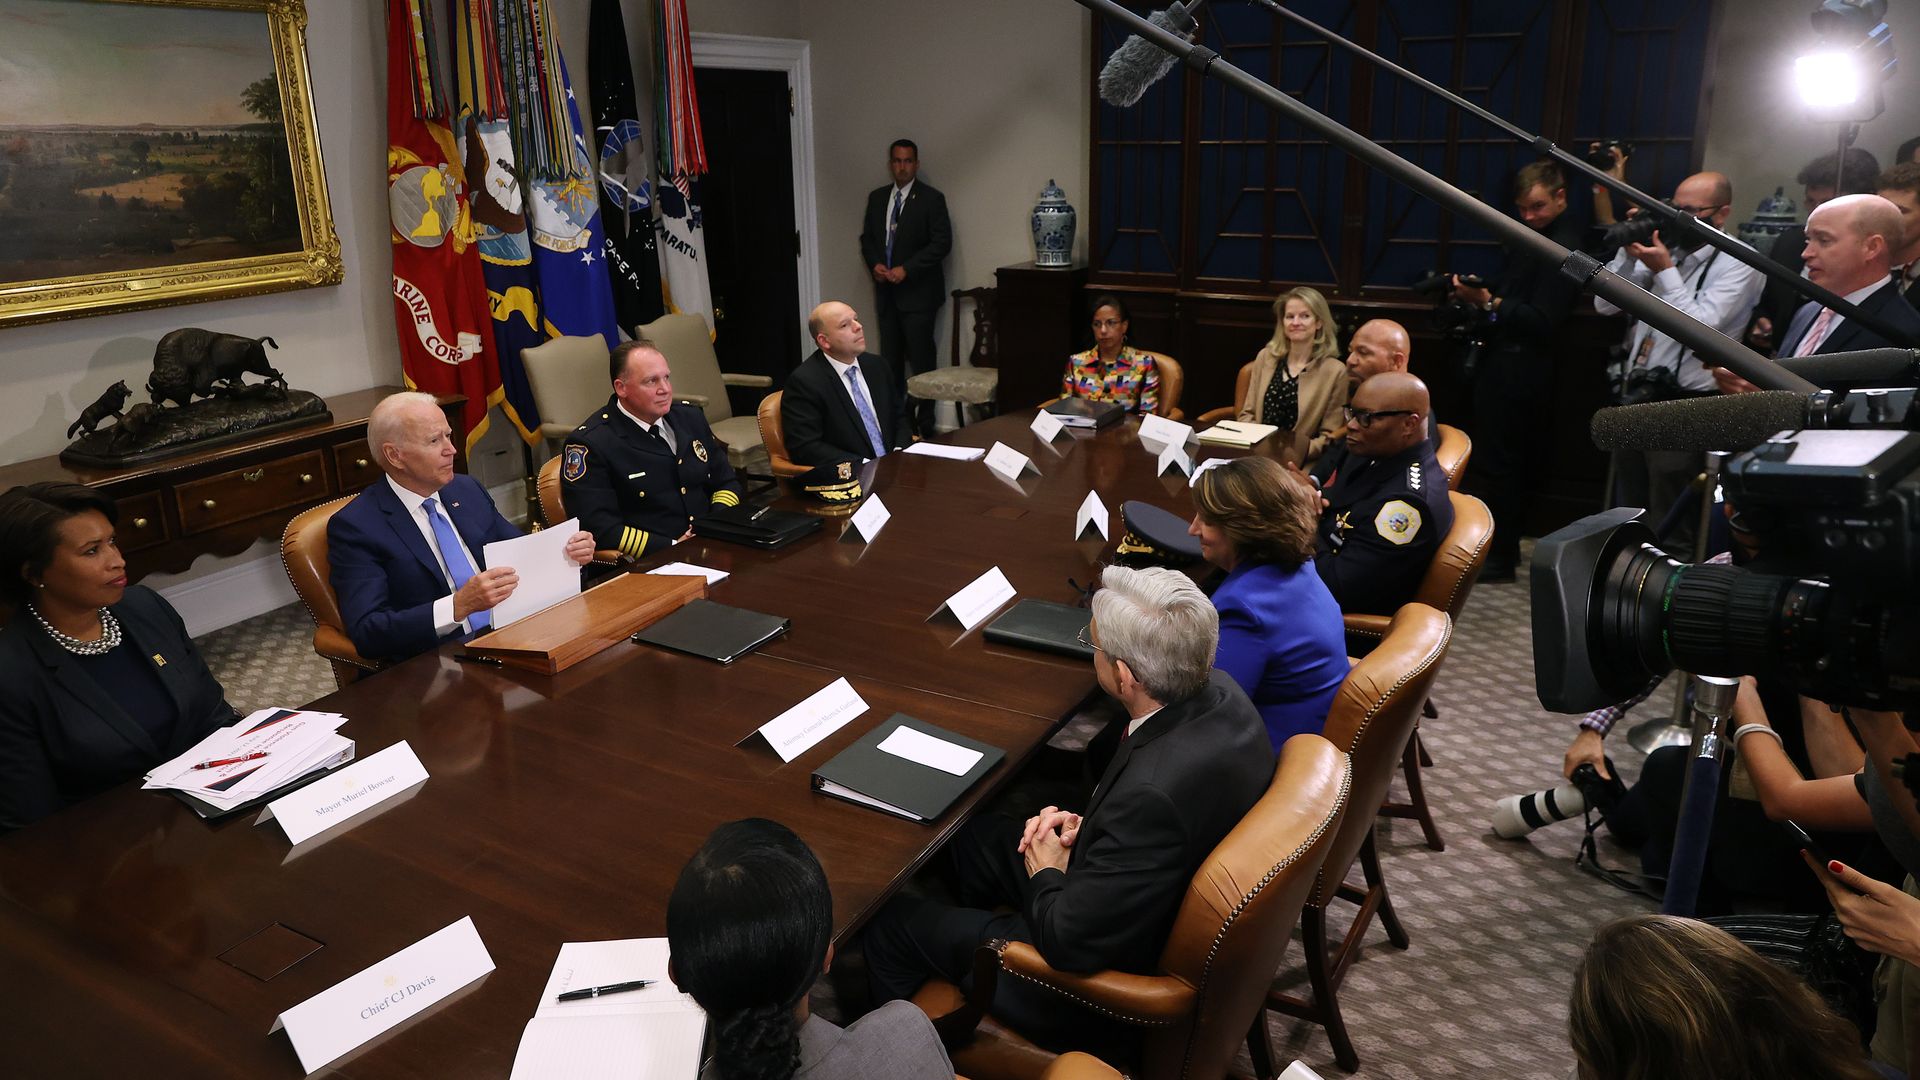 President Biden is seen discussing Cuba before a meeting focused on gun violence.